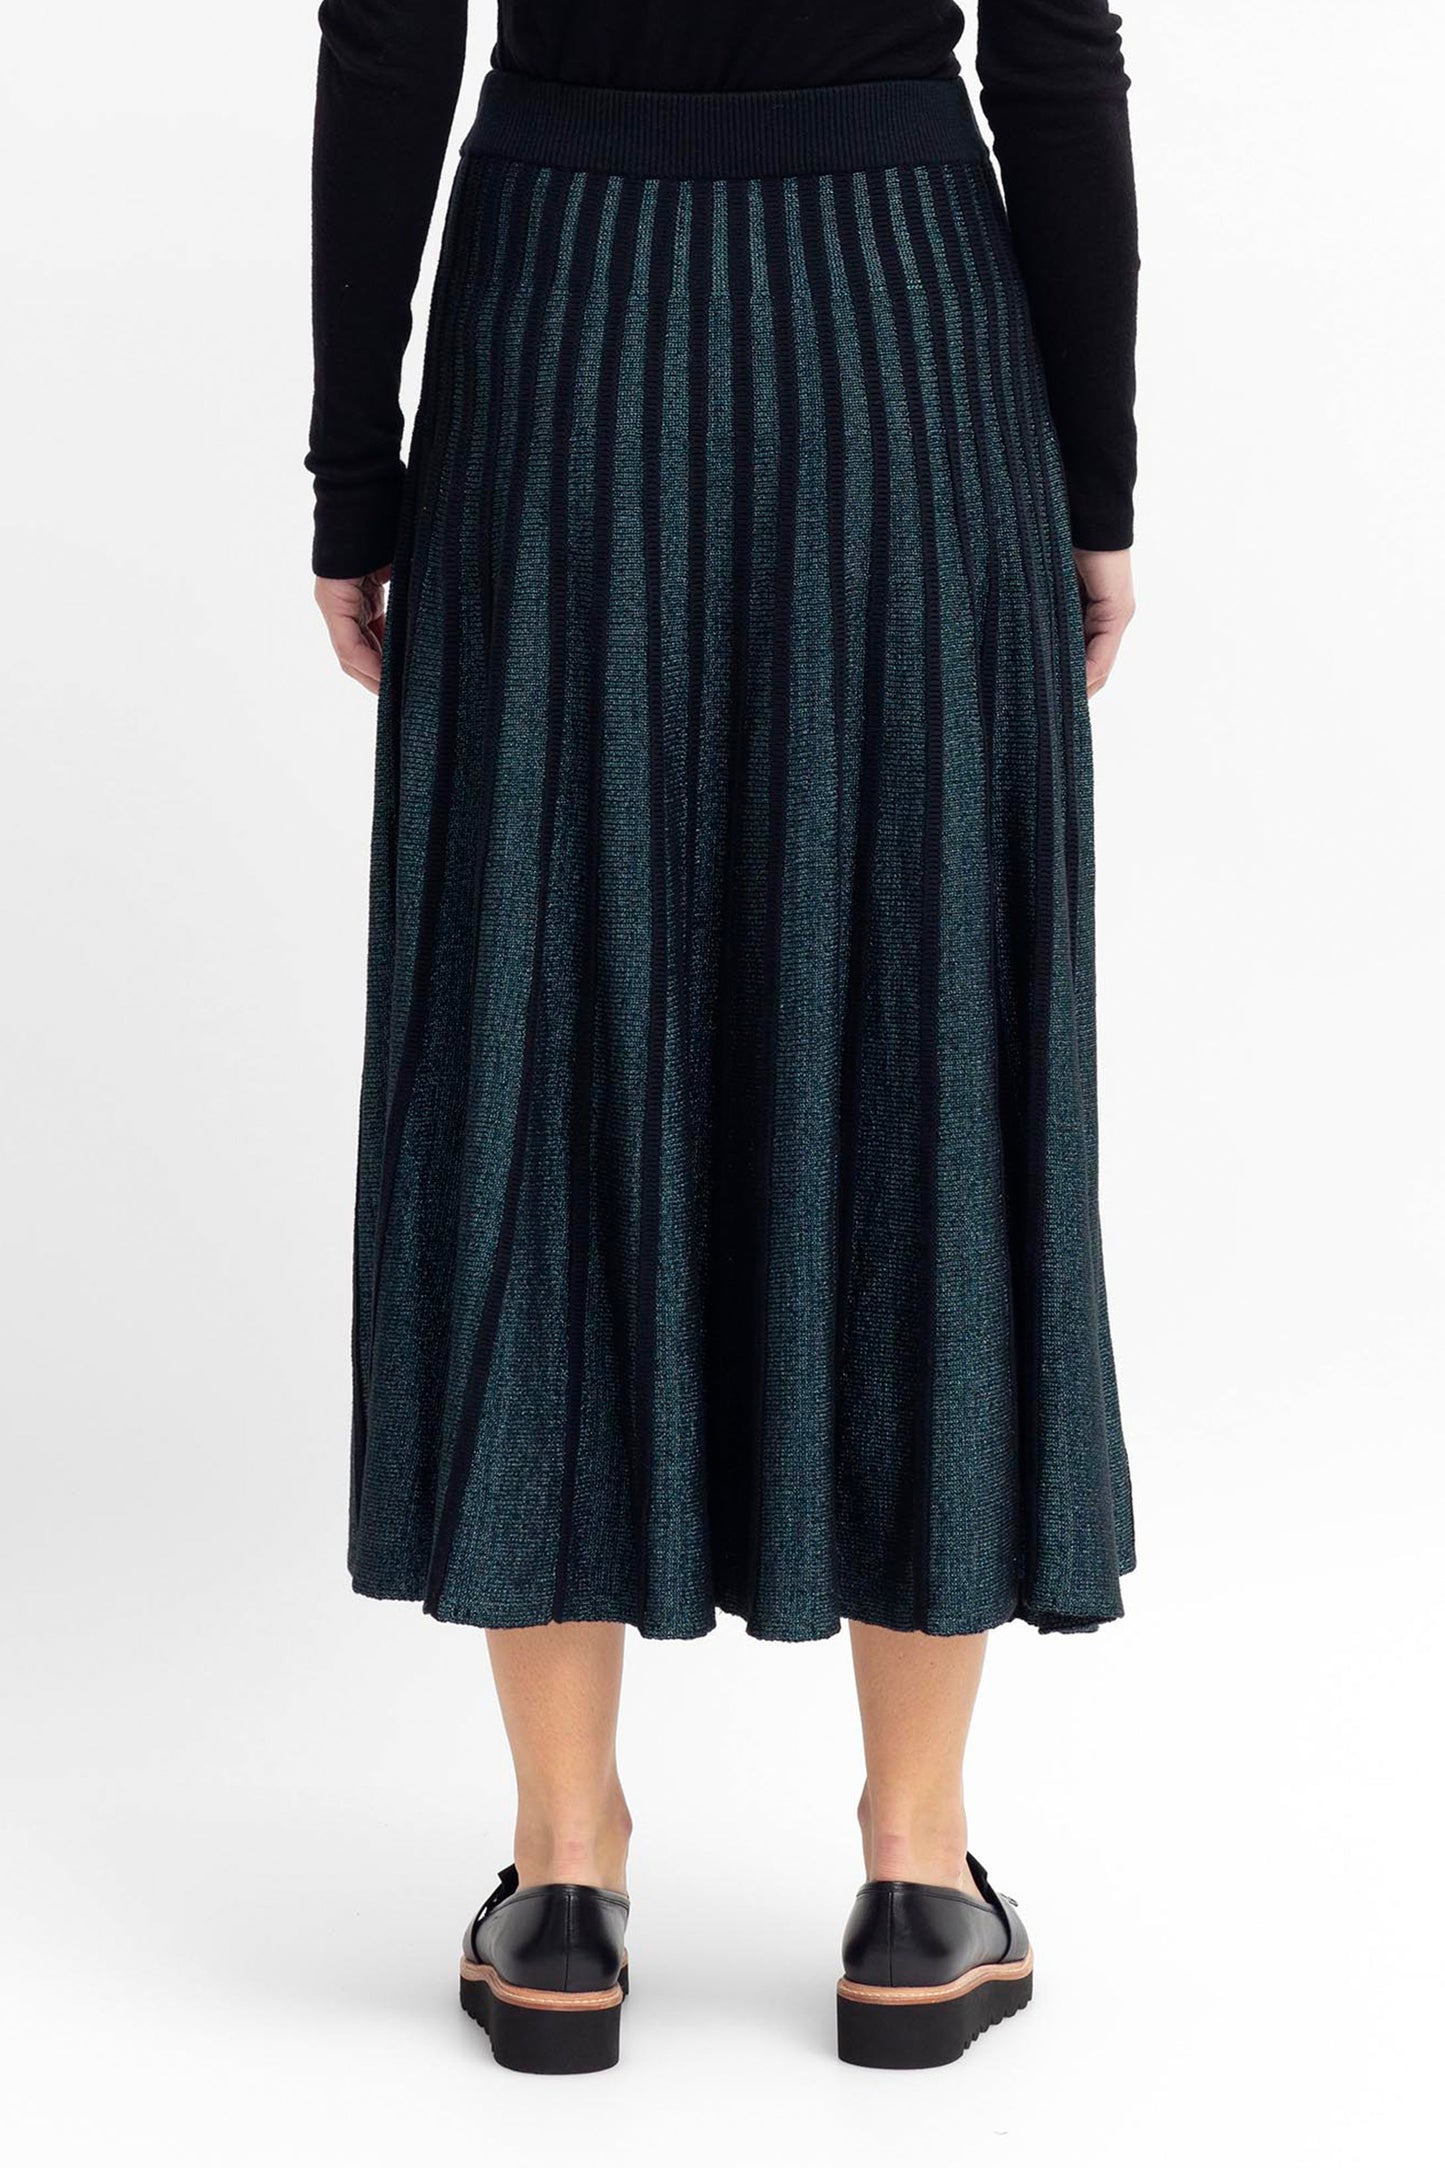 Glittra Lurex Knit Metallic A-Line Skirt Model Back | TEAL METALLIC